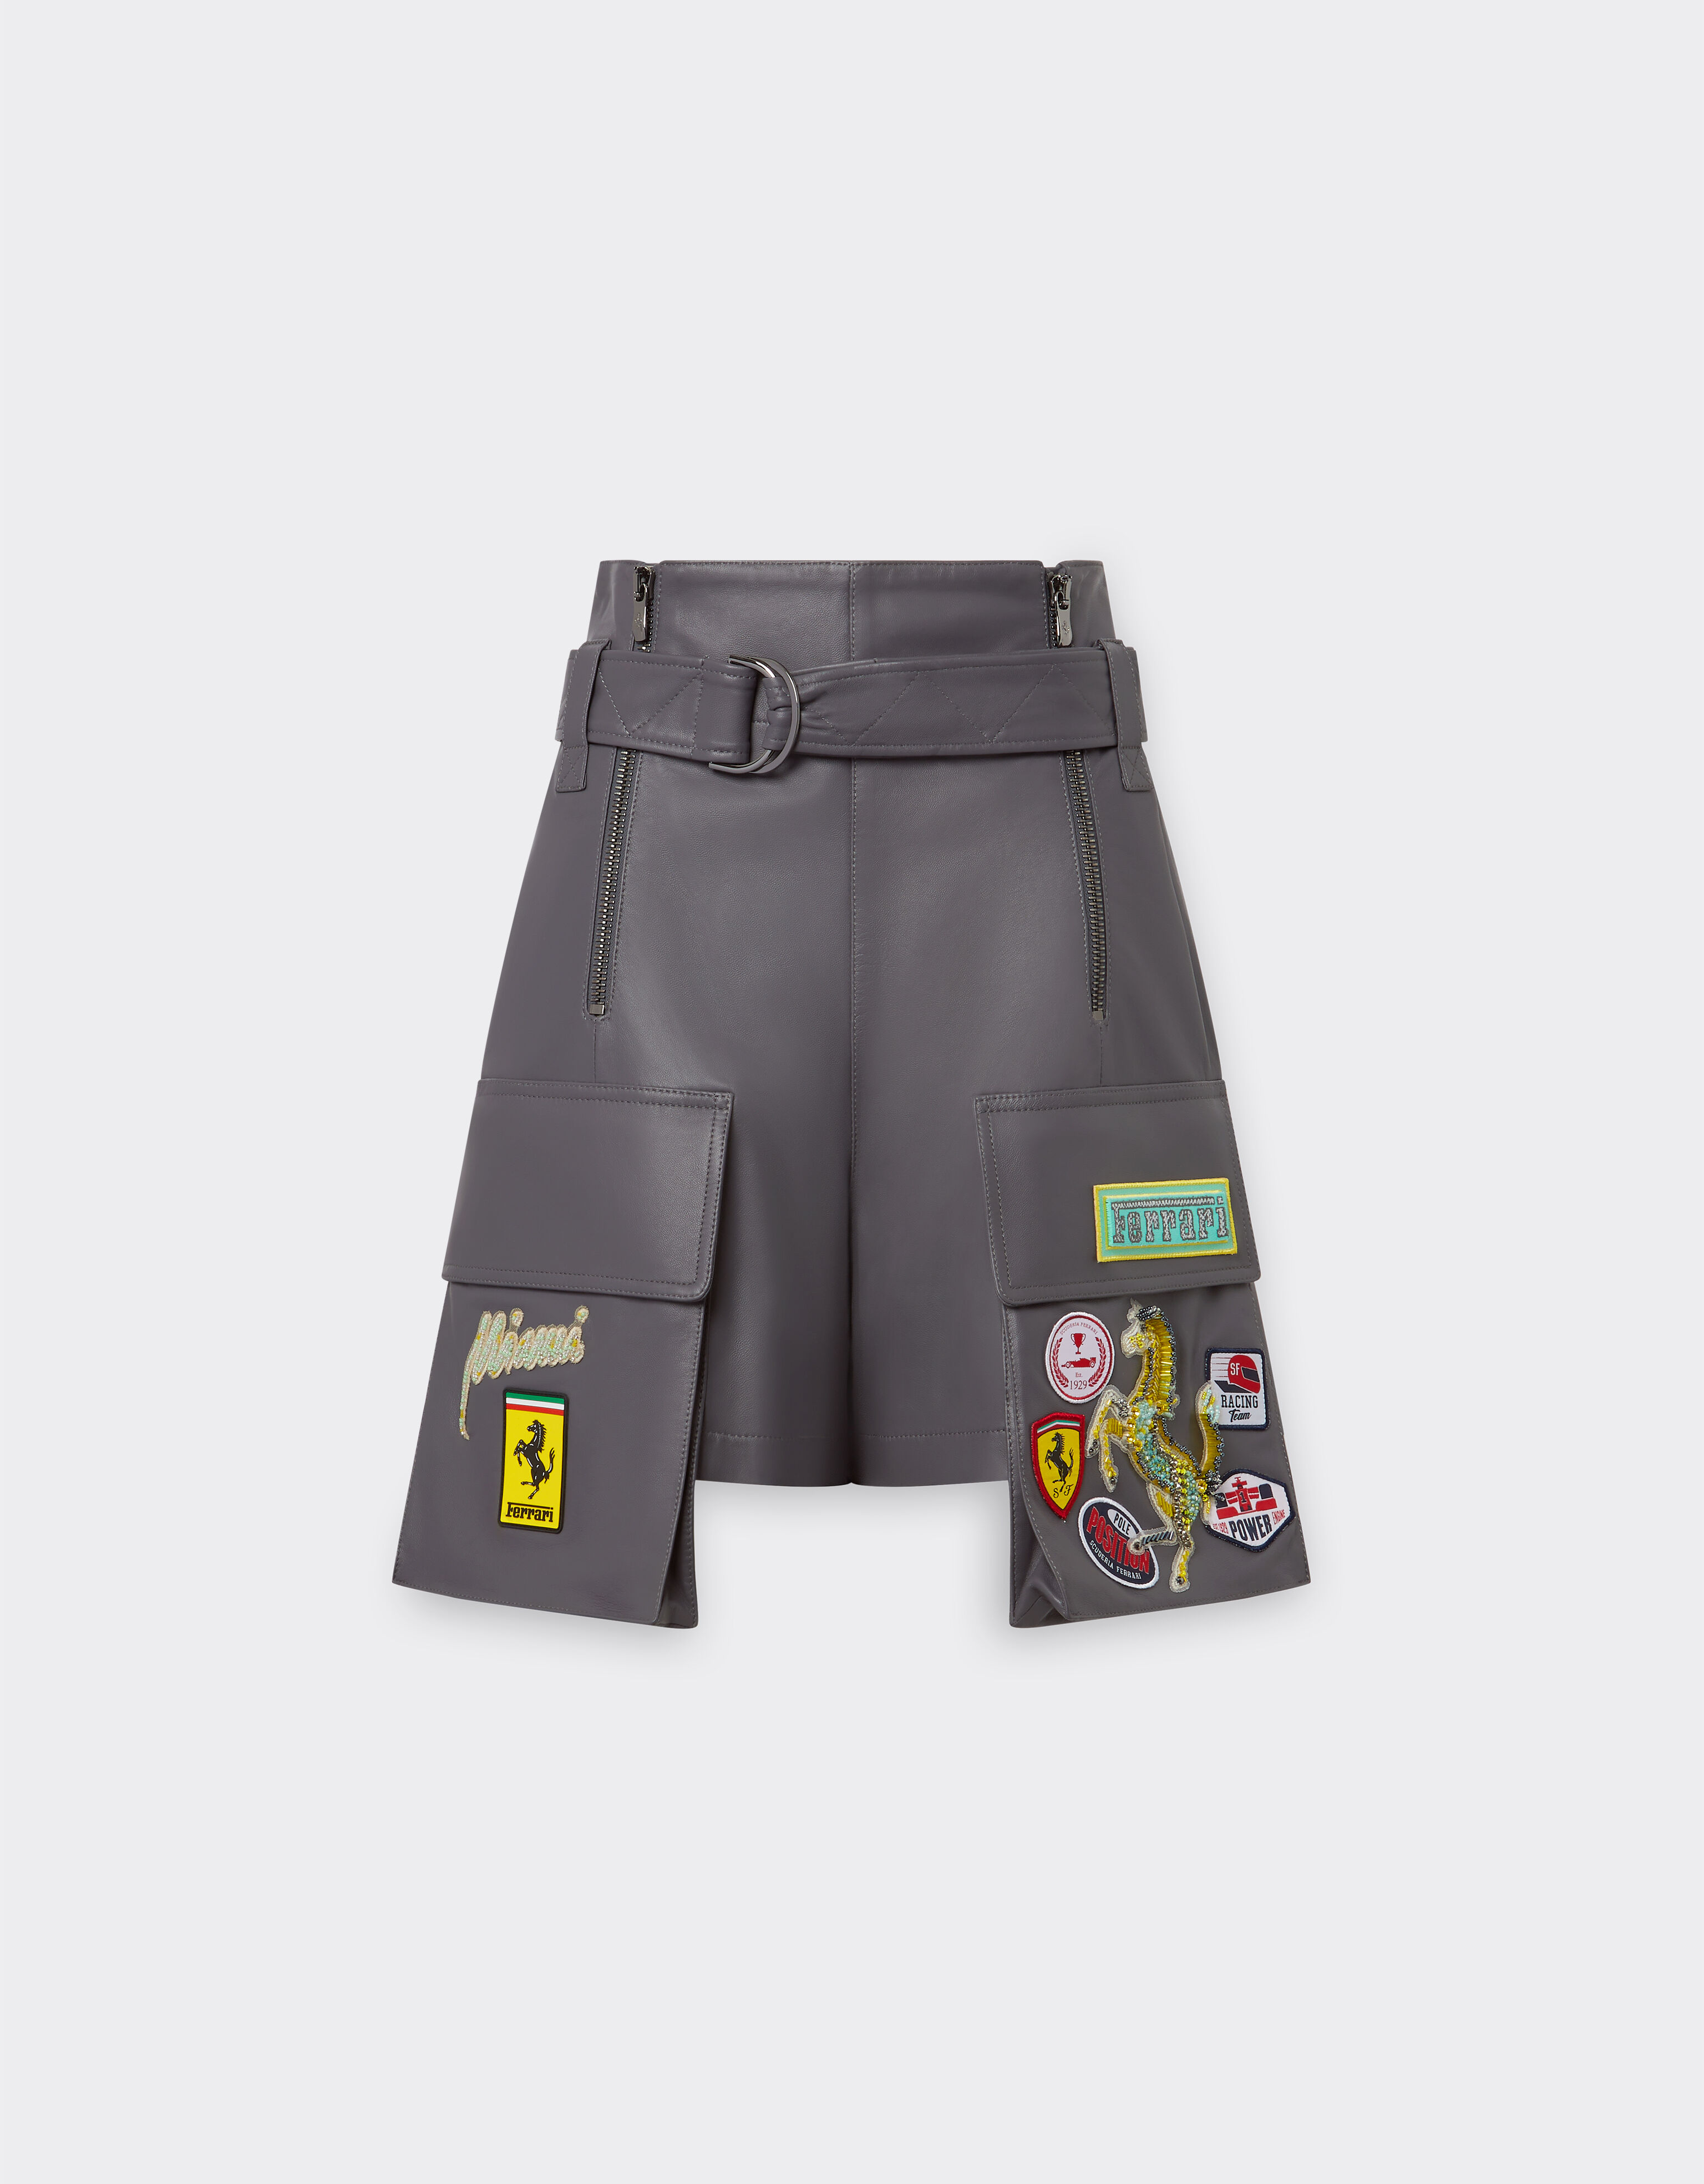 Ferrari Shorts de napa Miami Collection Gris oscuro 21252f